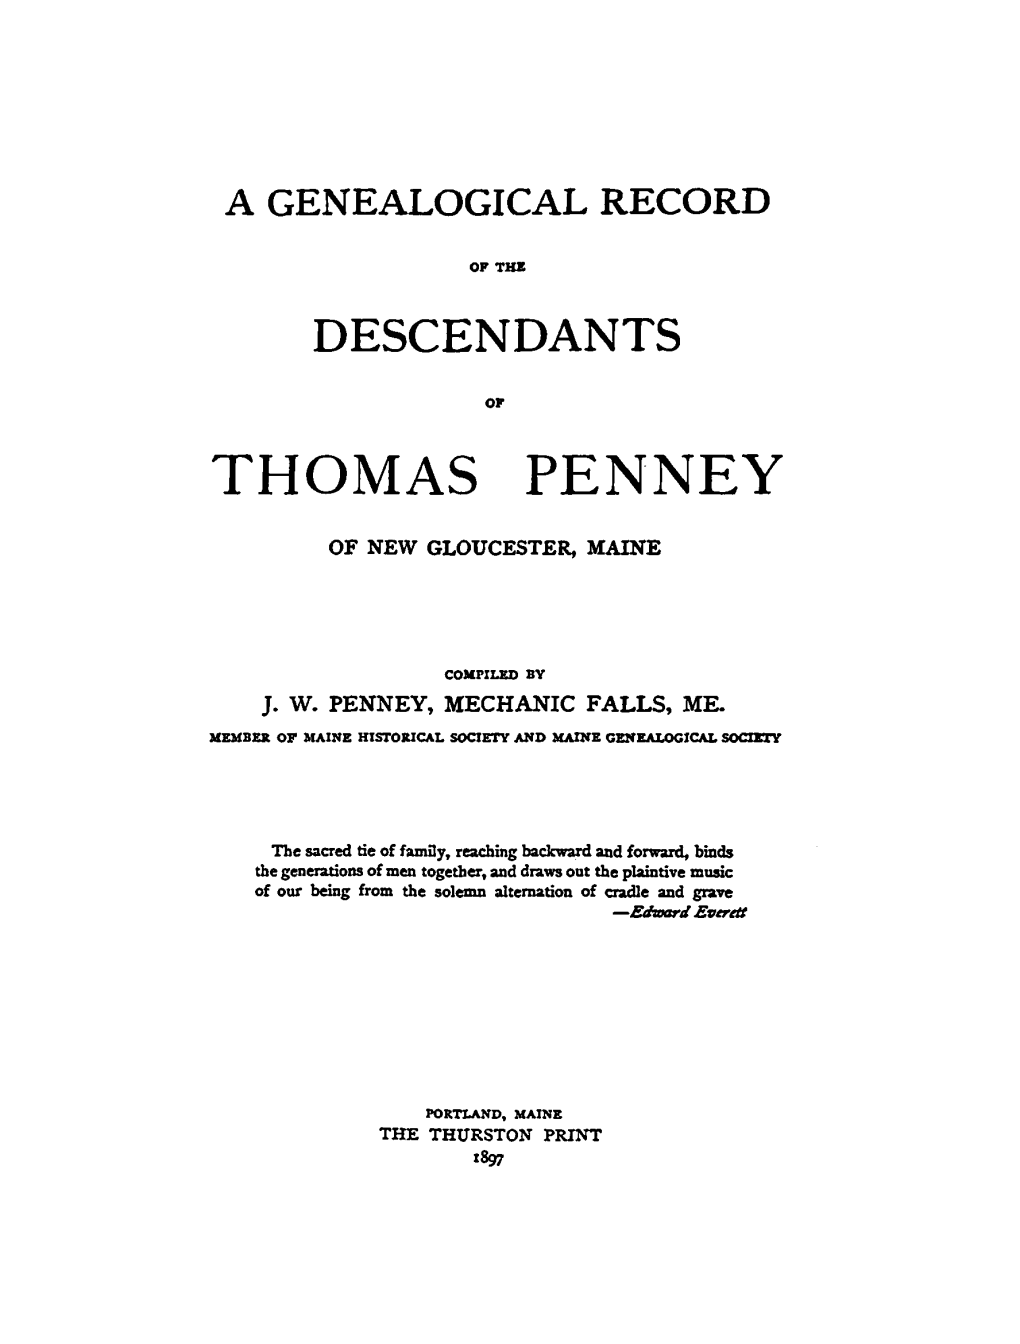 Thomas Penney